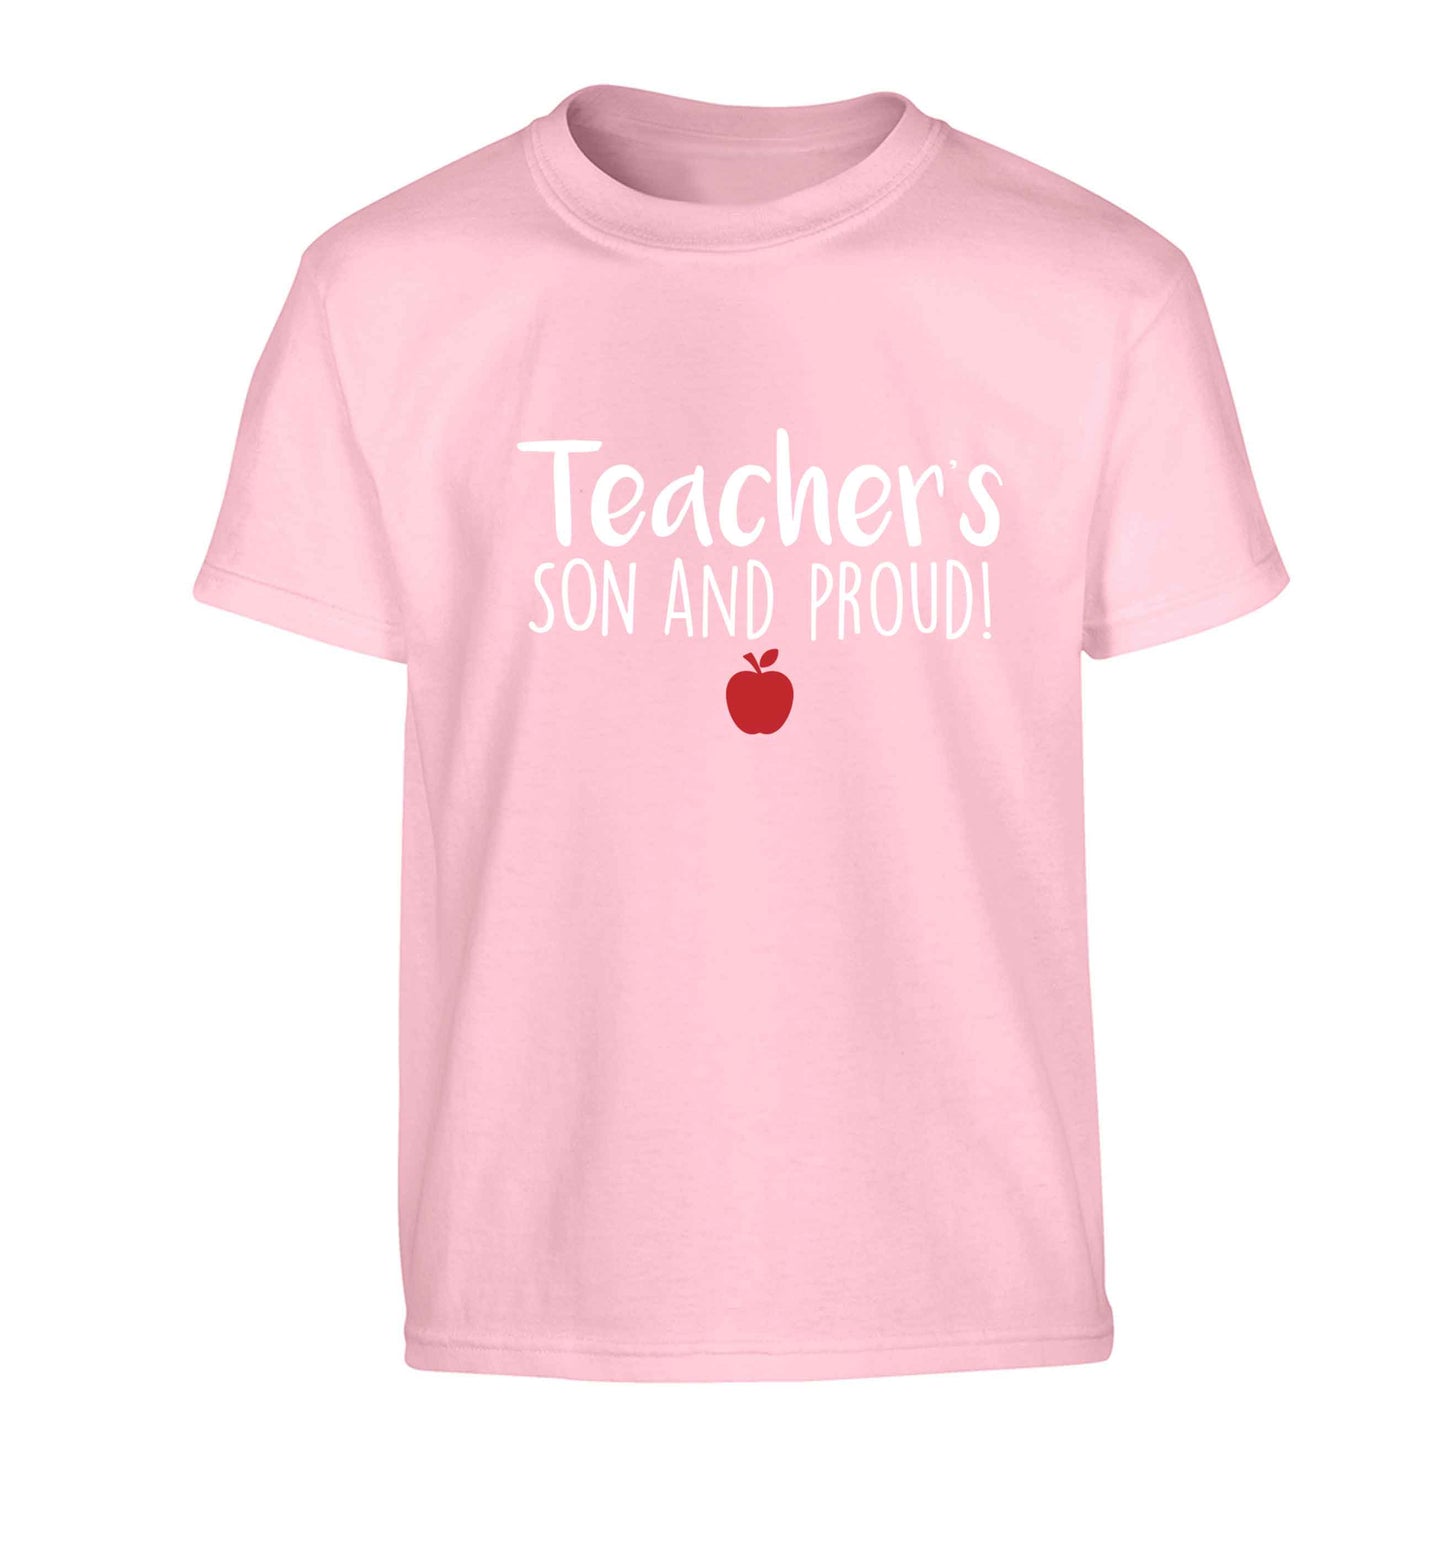 Teachers son and proud Children's light pink Tshirt 12-13 Years